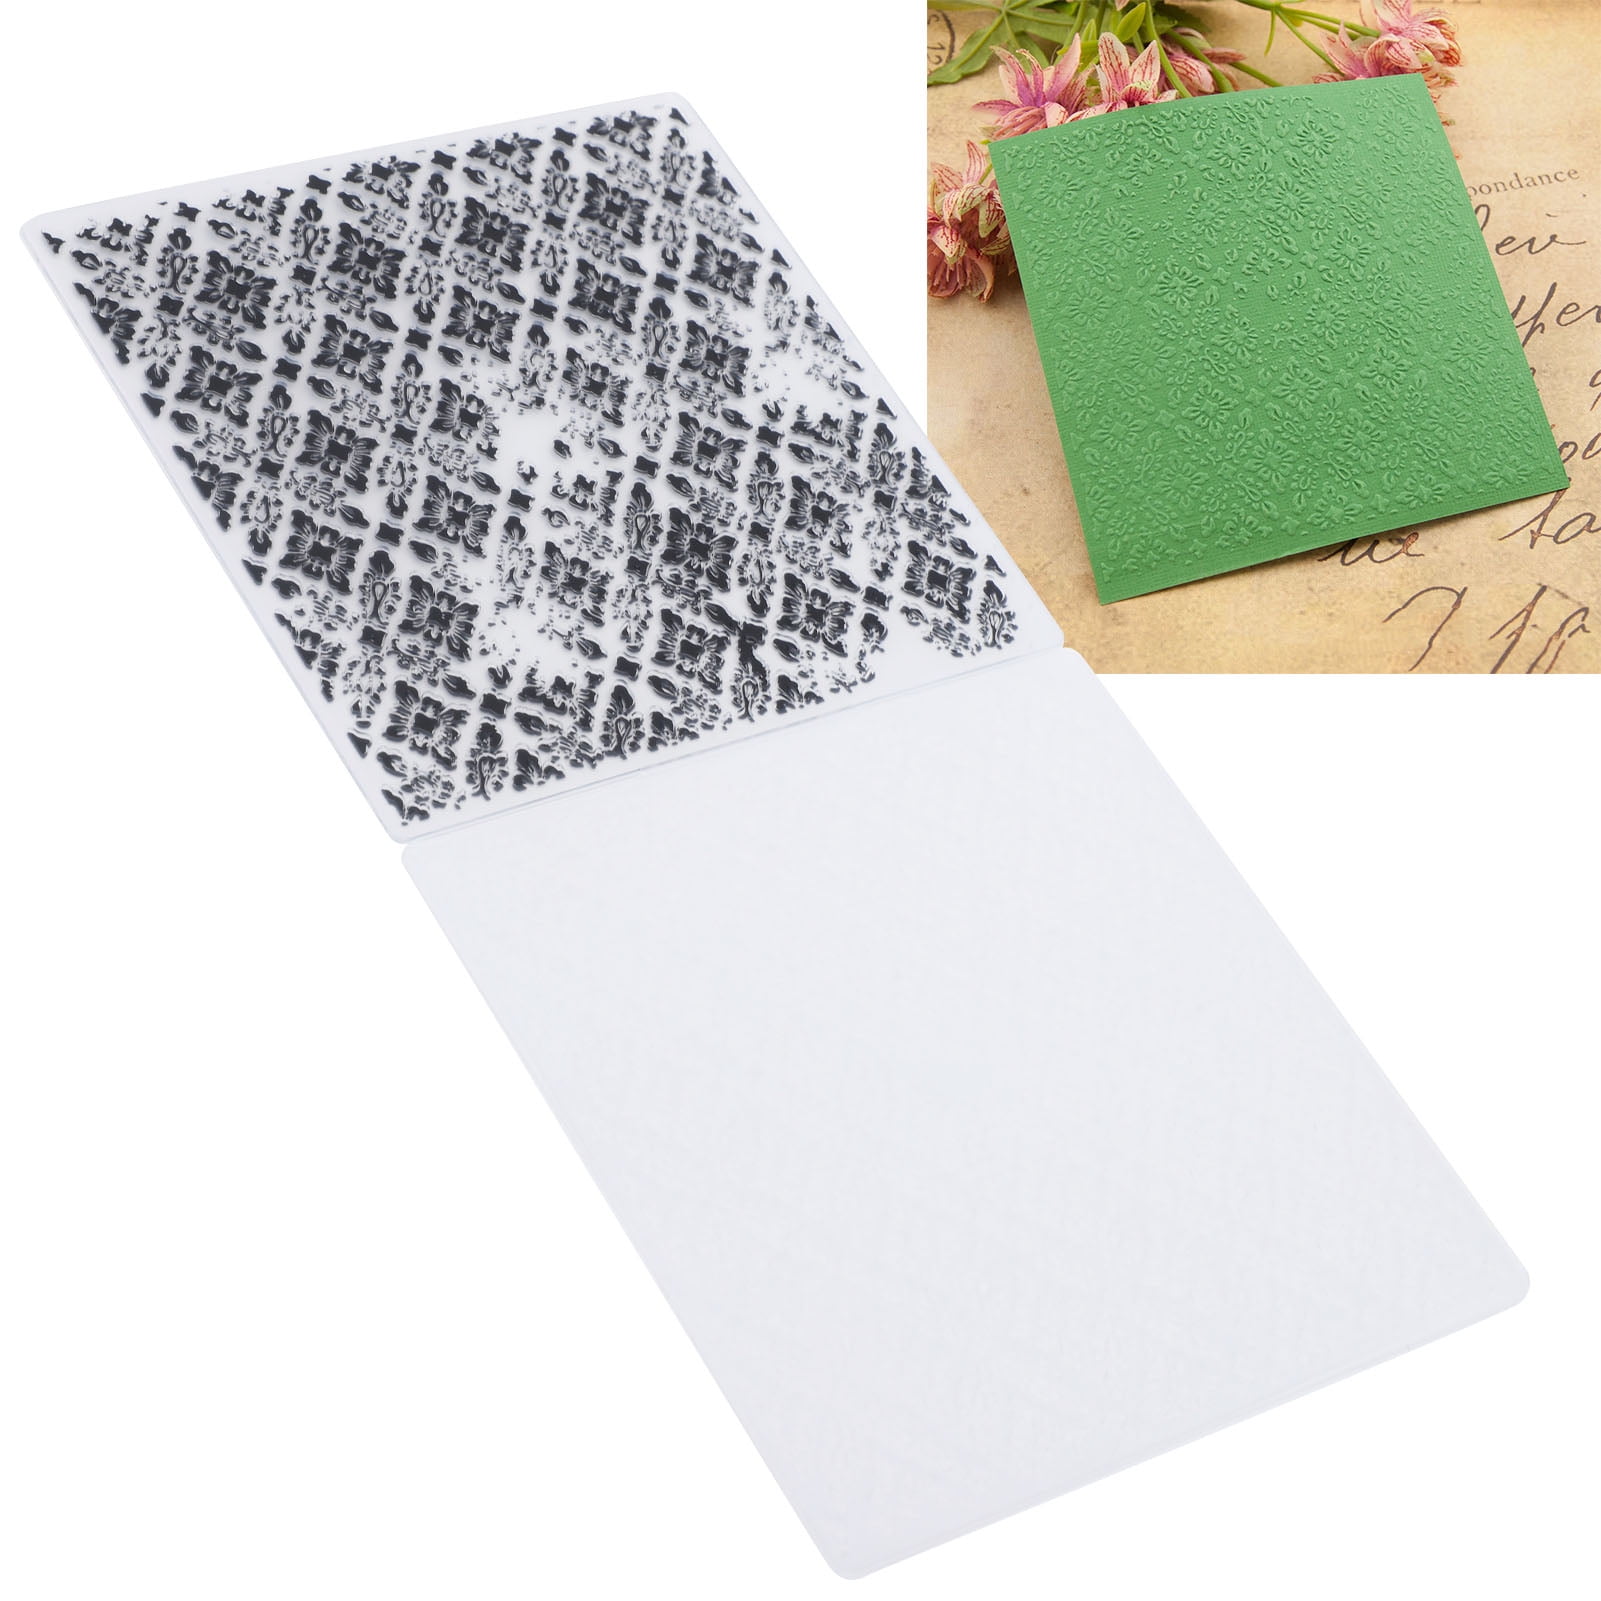 Plastic Embossing Folders,4Pcs DIY Plastic Embossing Folders Card Making Scrapbooking Embossed Template Paper Craft